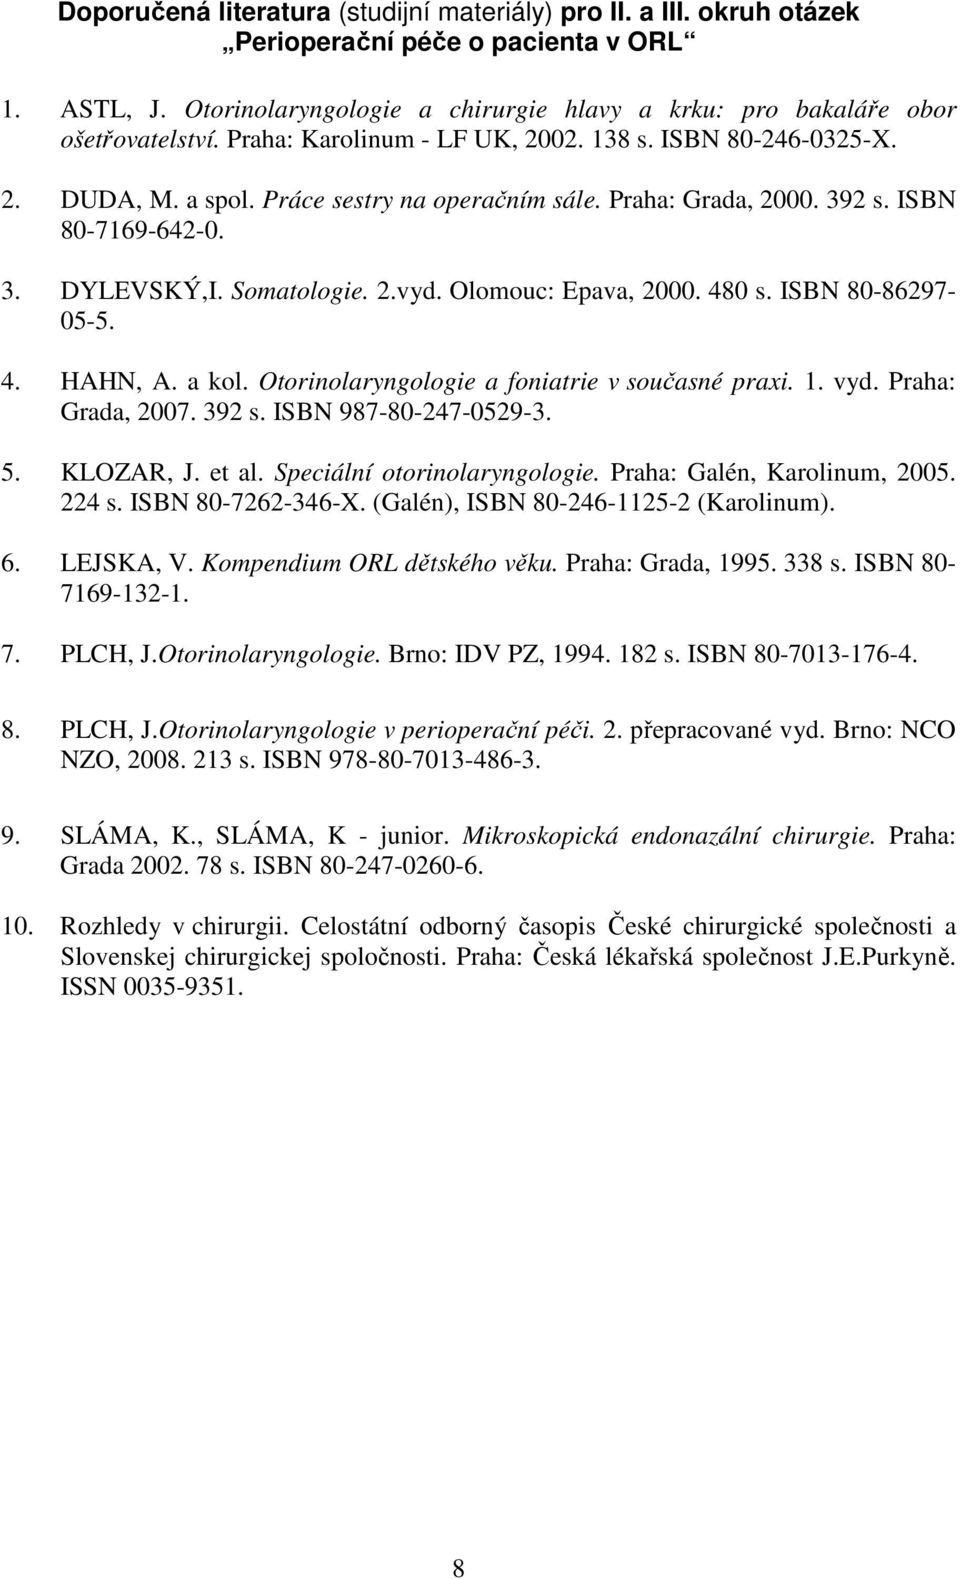 Olomouc: Epava, 2000. 480 s. ISBN 80-86297- 05-5. 4. HAHN, A. a kol. Otorinolaryngologie a foniatrie v současné praxi. 1. vyd. Praha: Grada, 2007. 392 s. ISBN 987-80-247-0529-3. 5. KLOZAR, J. et al.